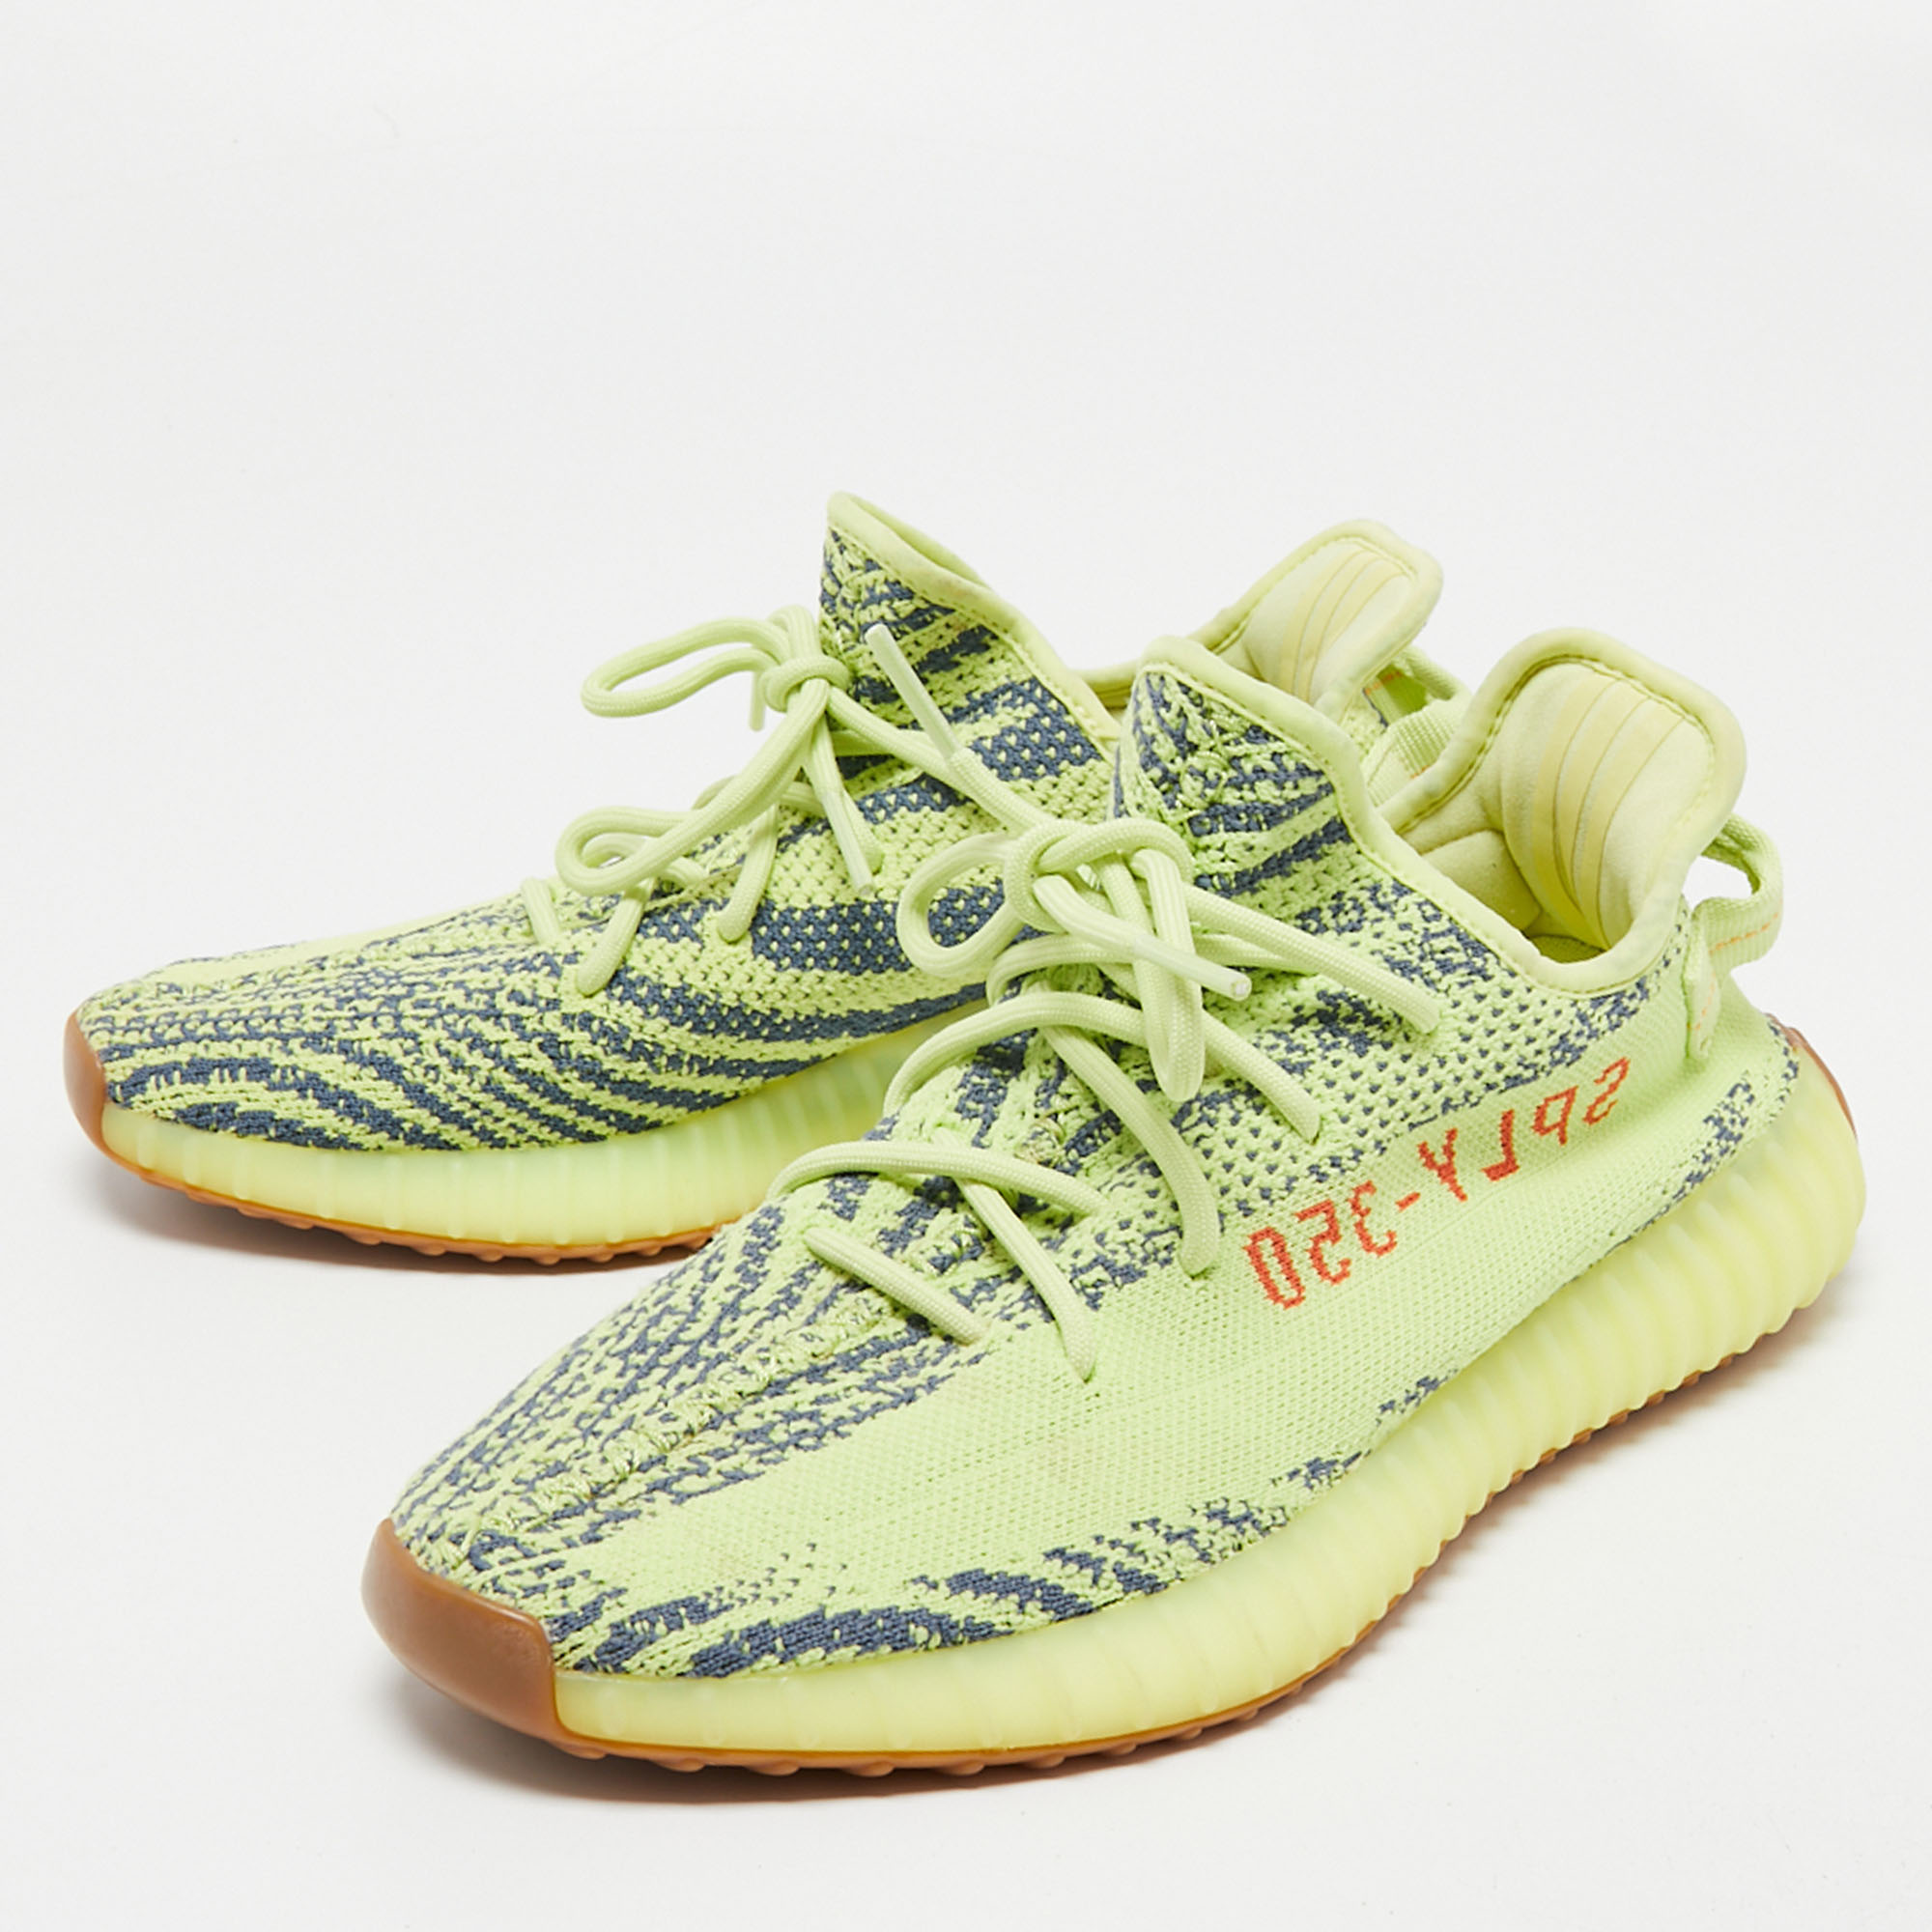 

Yeezy x Adidas Neon Yellow Knit Fabric Boost 350 V2 Semi Frozen Yellow Sneakers Size